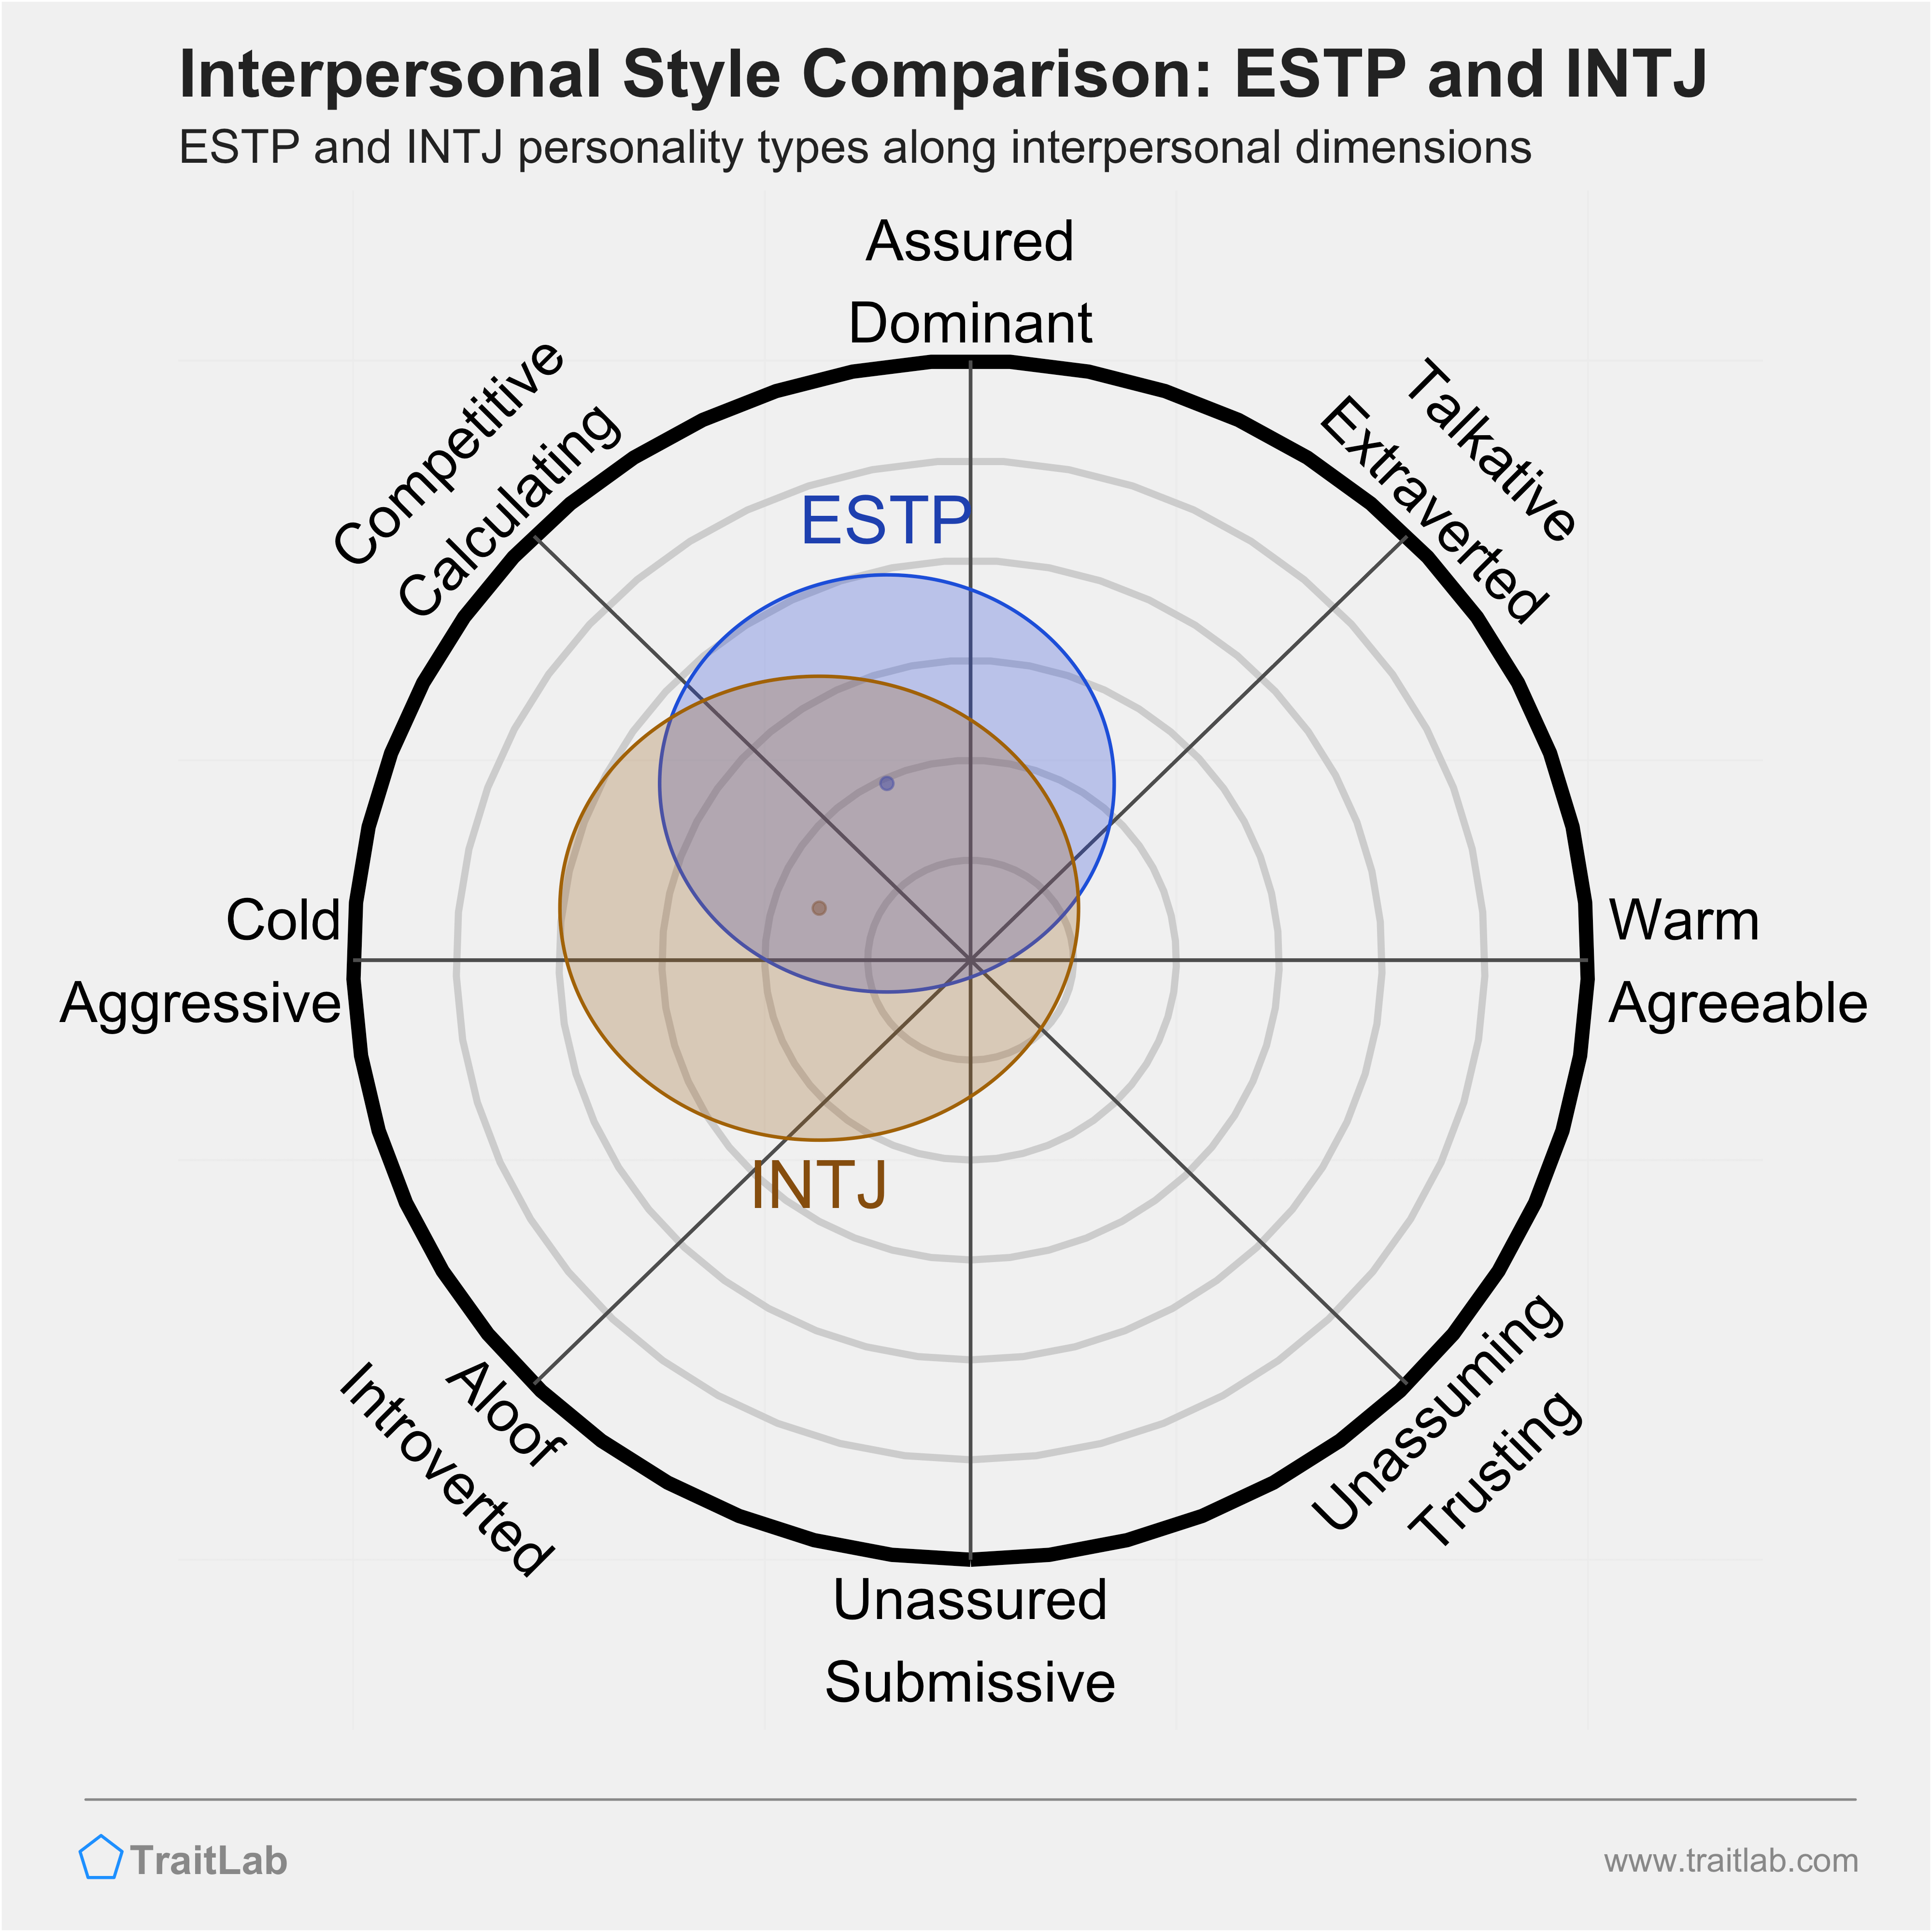 ESTP and INTJ comparison across interpersonal dimensions